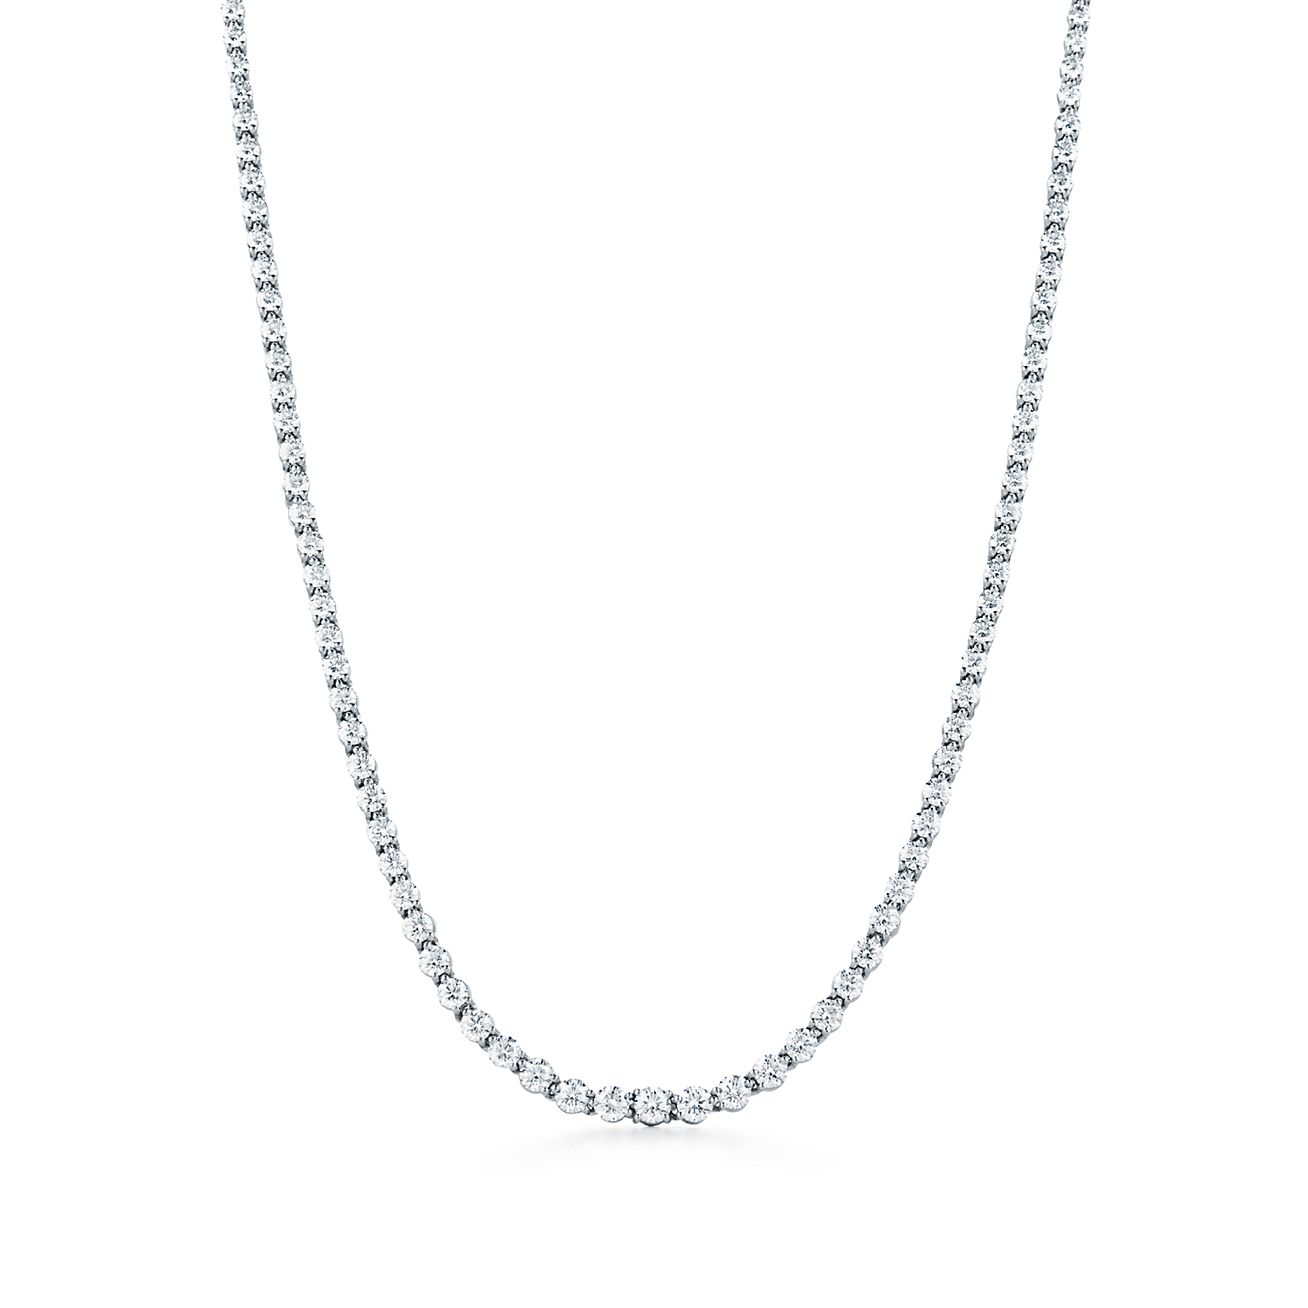 Minimal & Modern Blue Diamante Engraved Chrome Pyramid Metal Necklace TR Zx216 